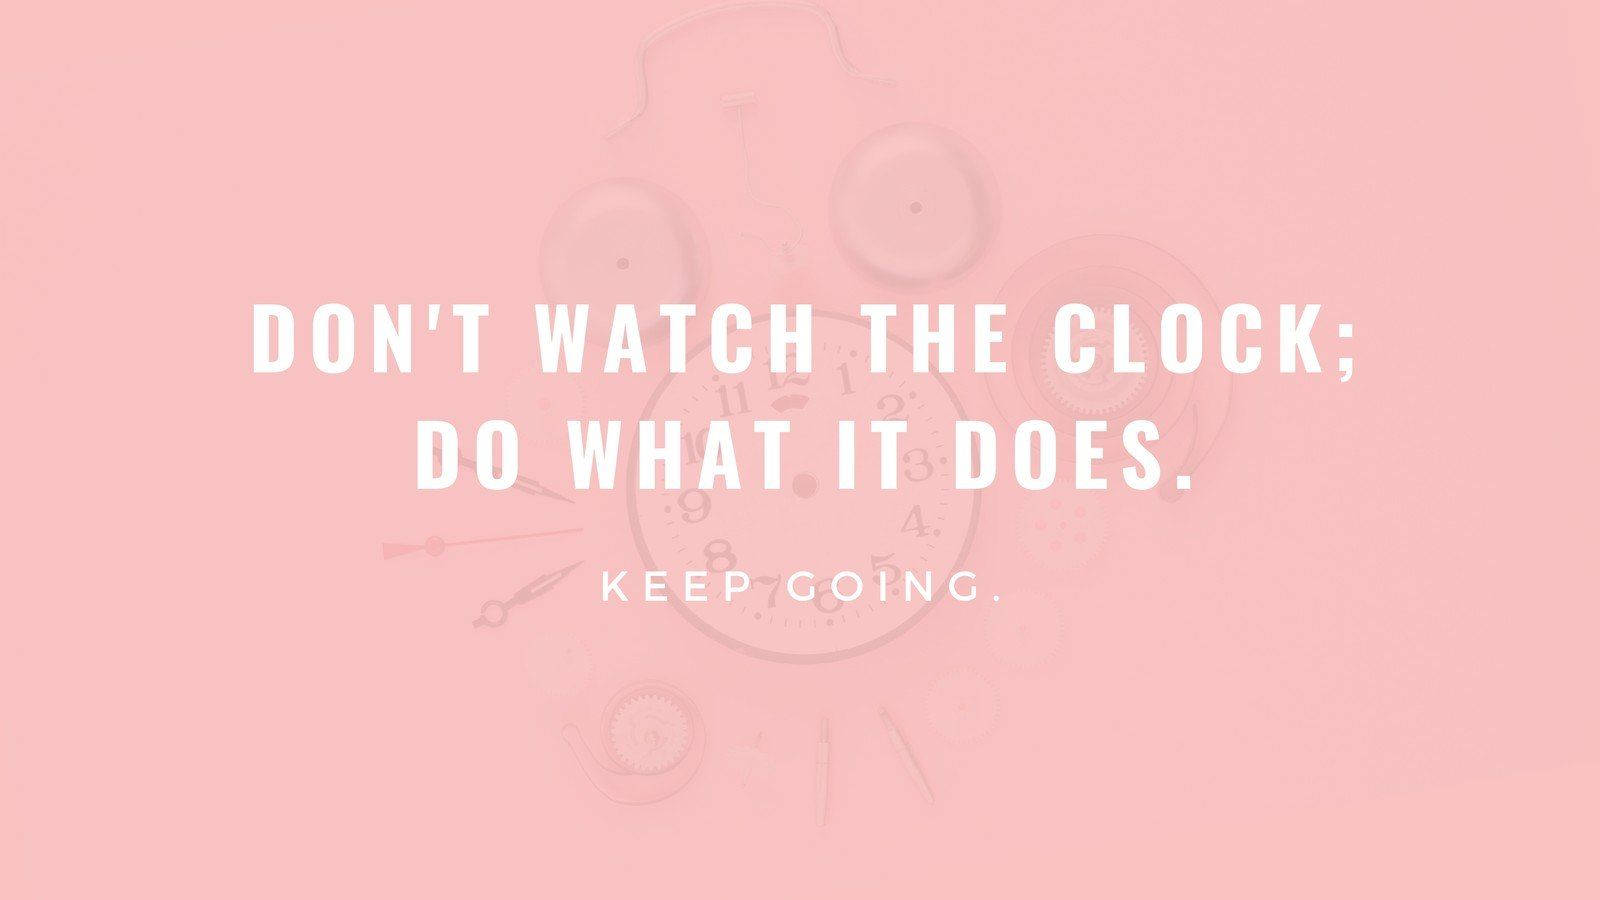 Pastel Pink Motivational Quote Wallpaper